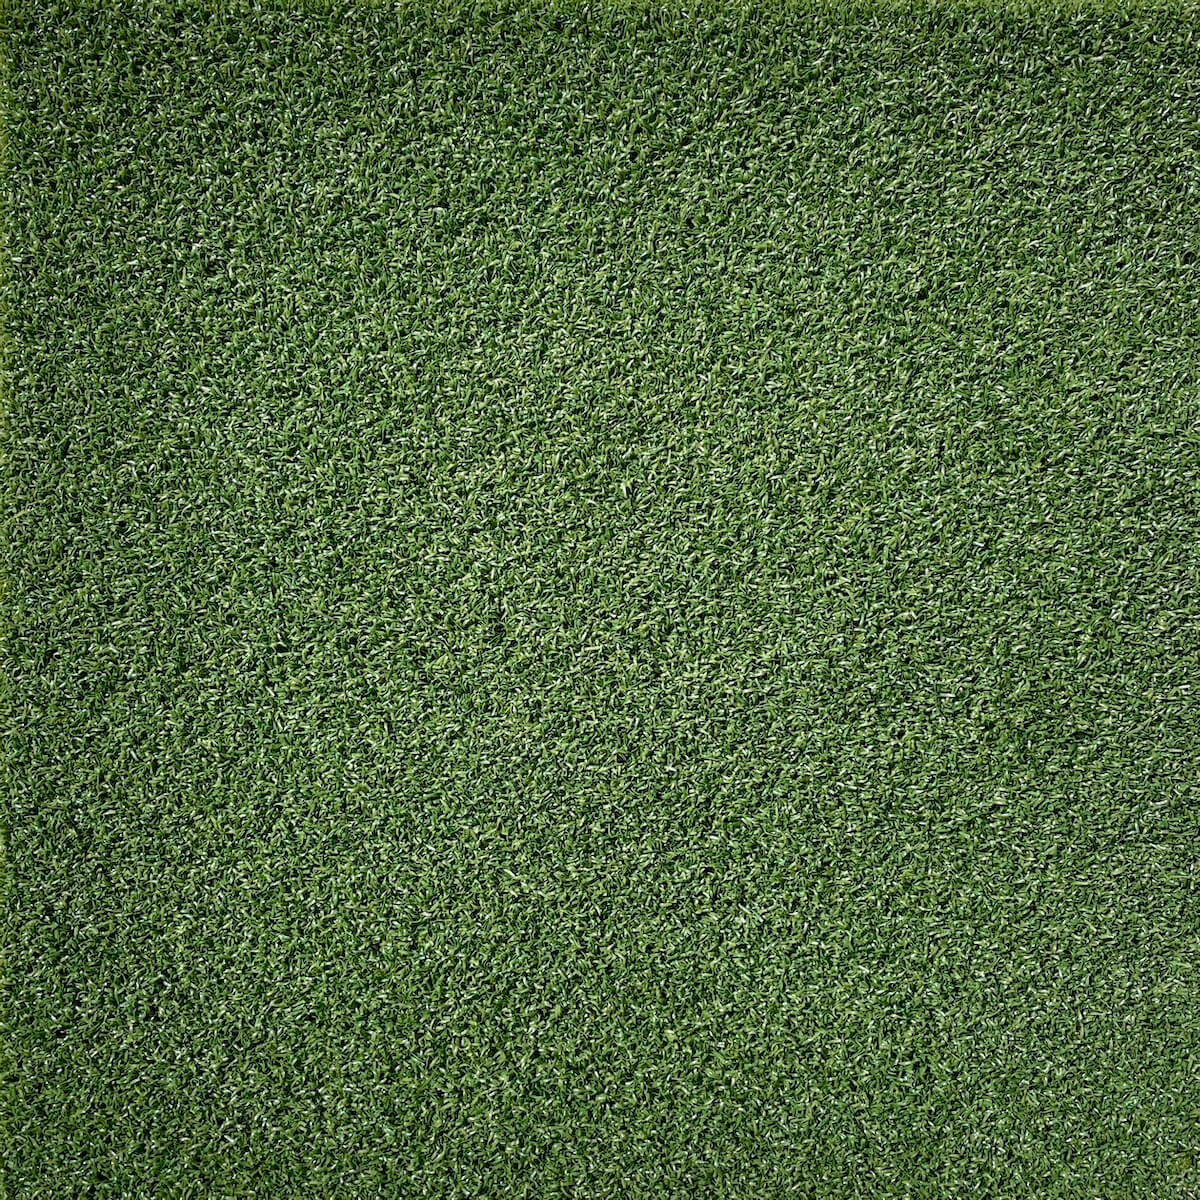 Artificial grass for putting green